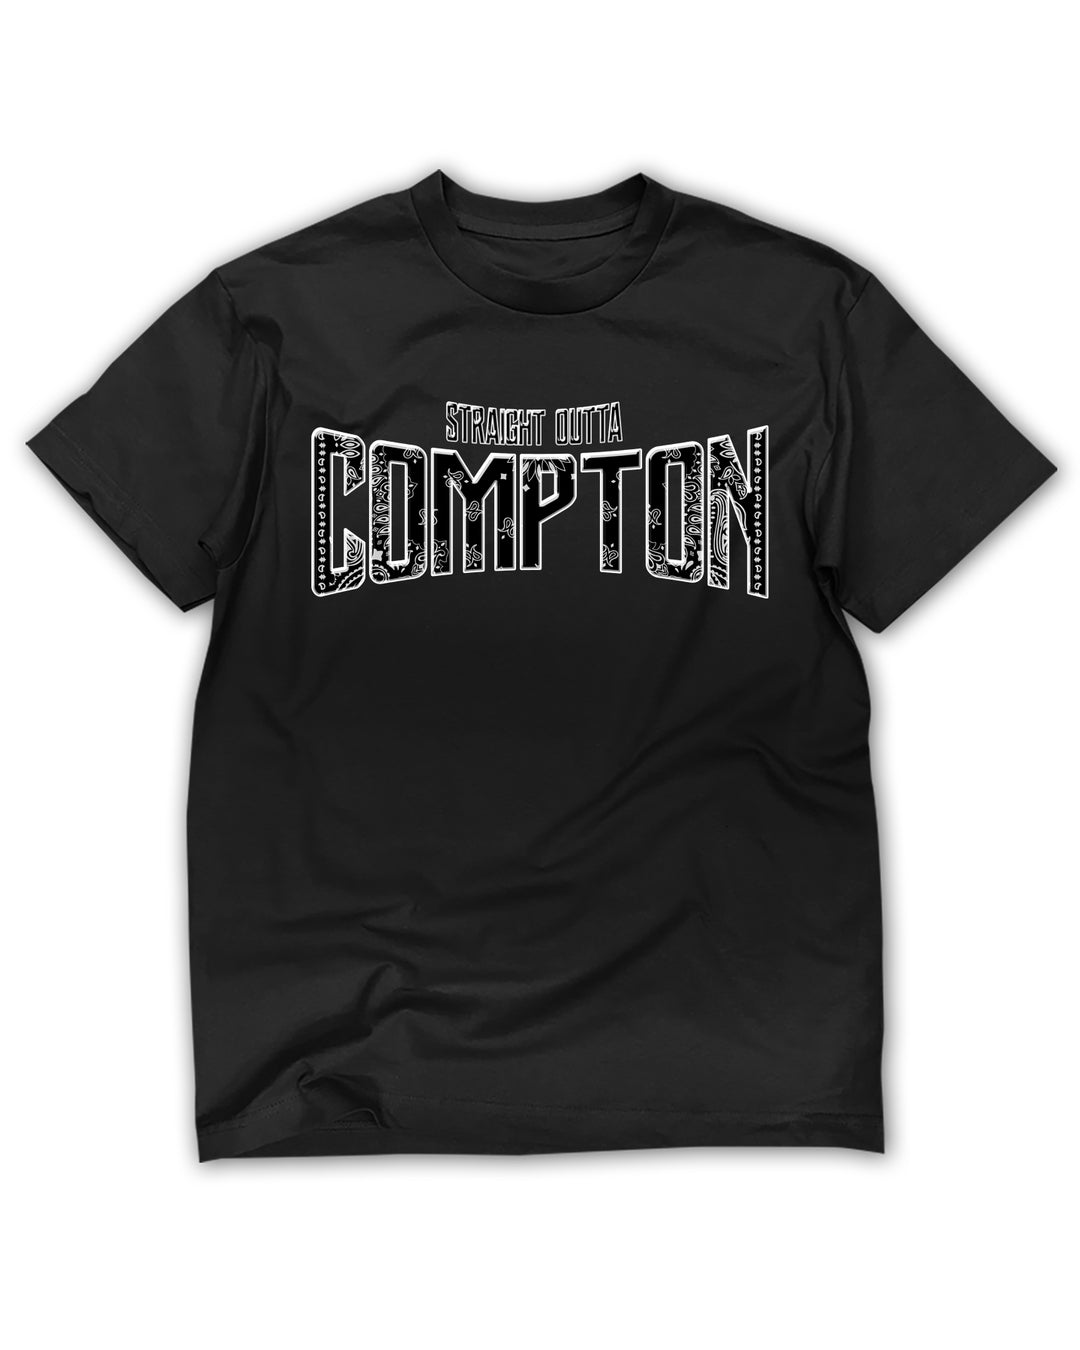 Straight Outta Compton Tee - Black